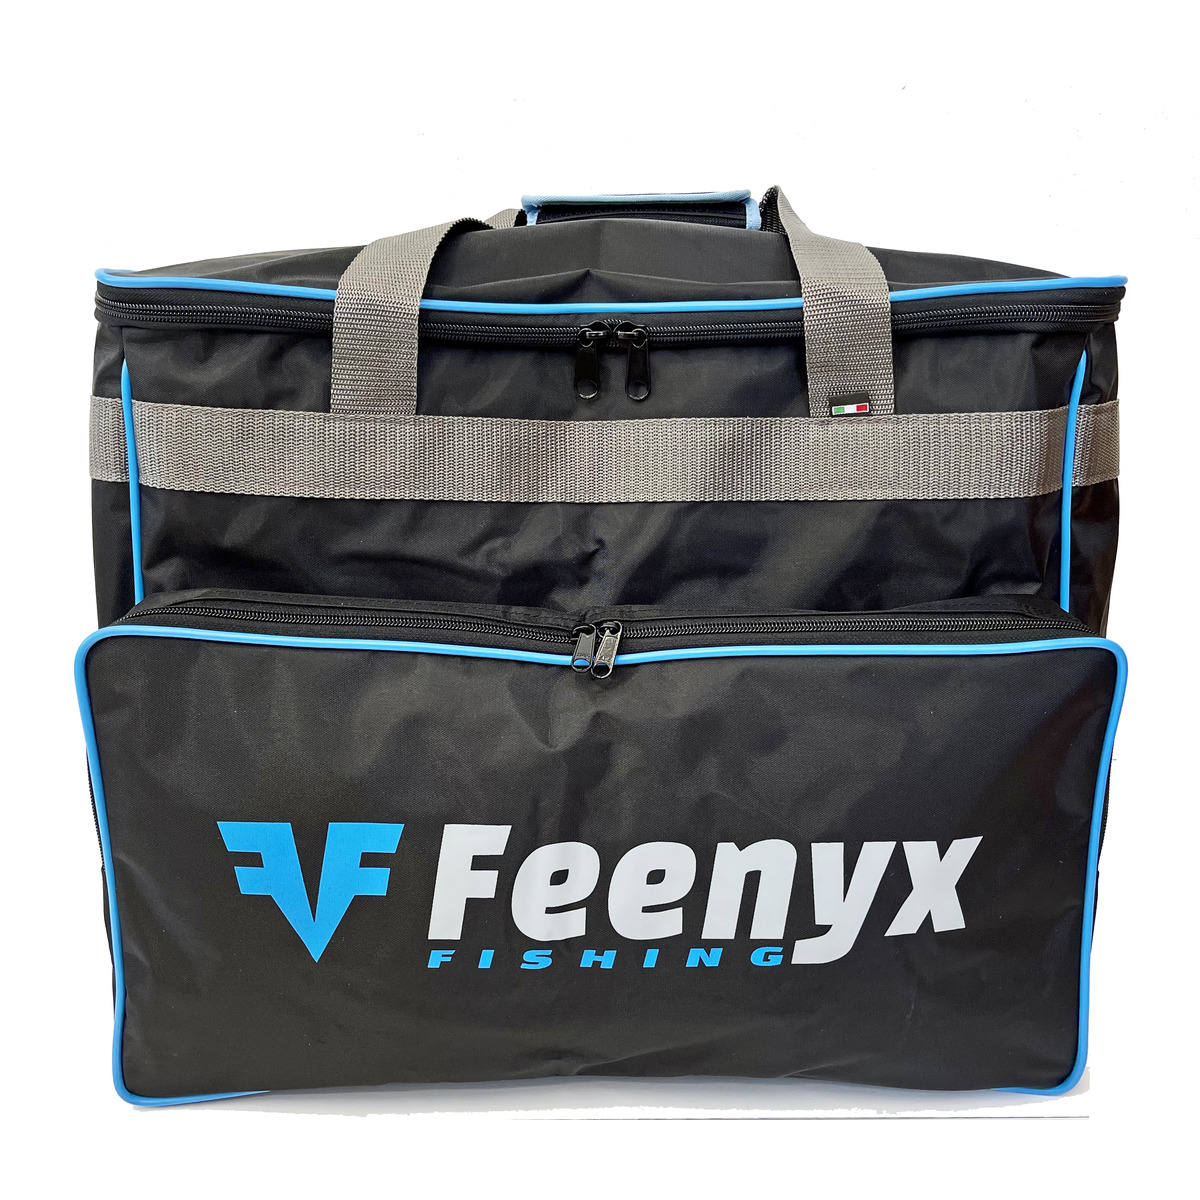 Feenyx Accessory Box - Large